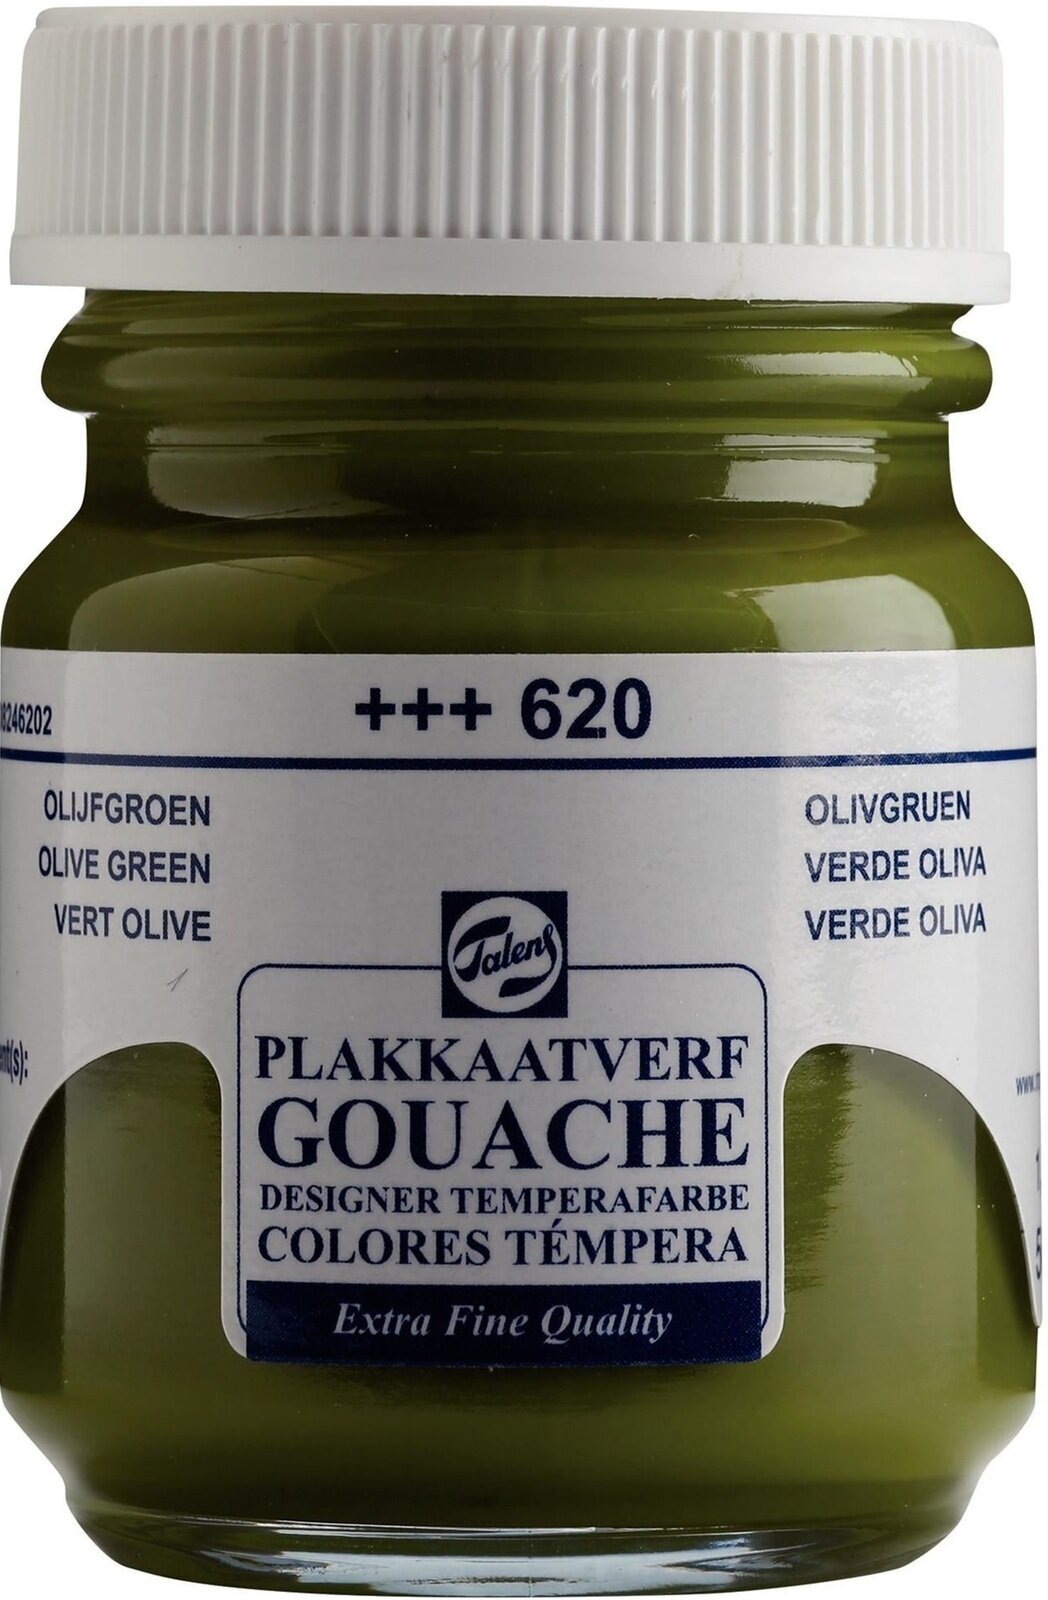 Pintura gouache Talens Gouache Extra Fine Gouache Paint 50 ml Olive Green Pintura gouache